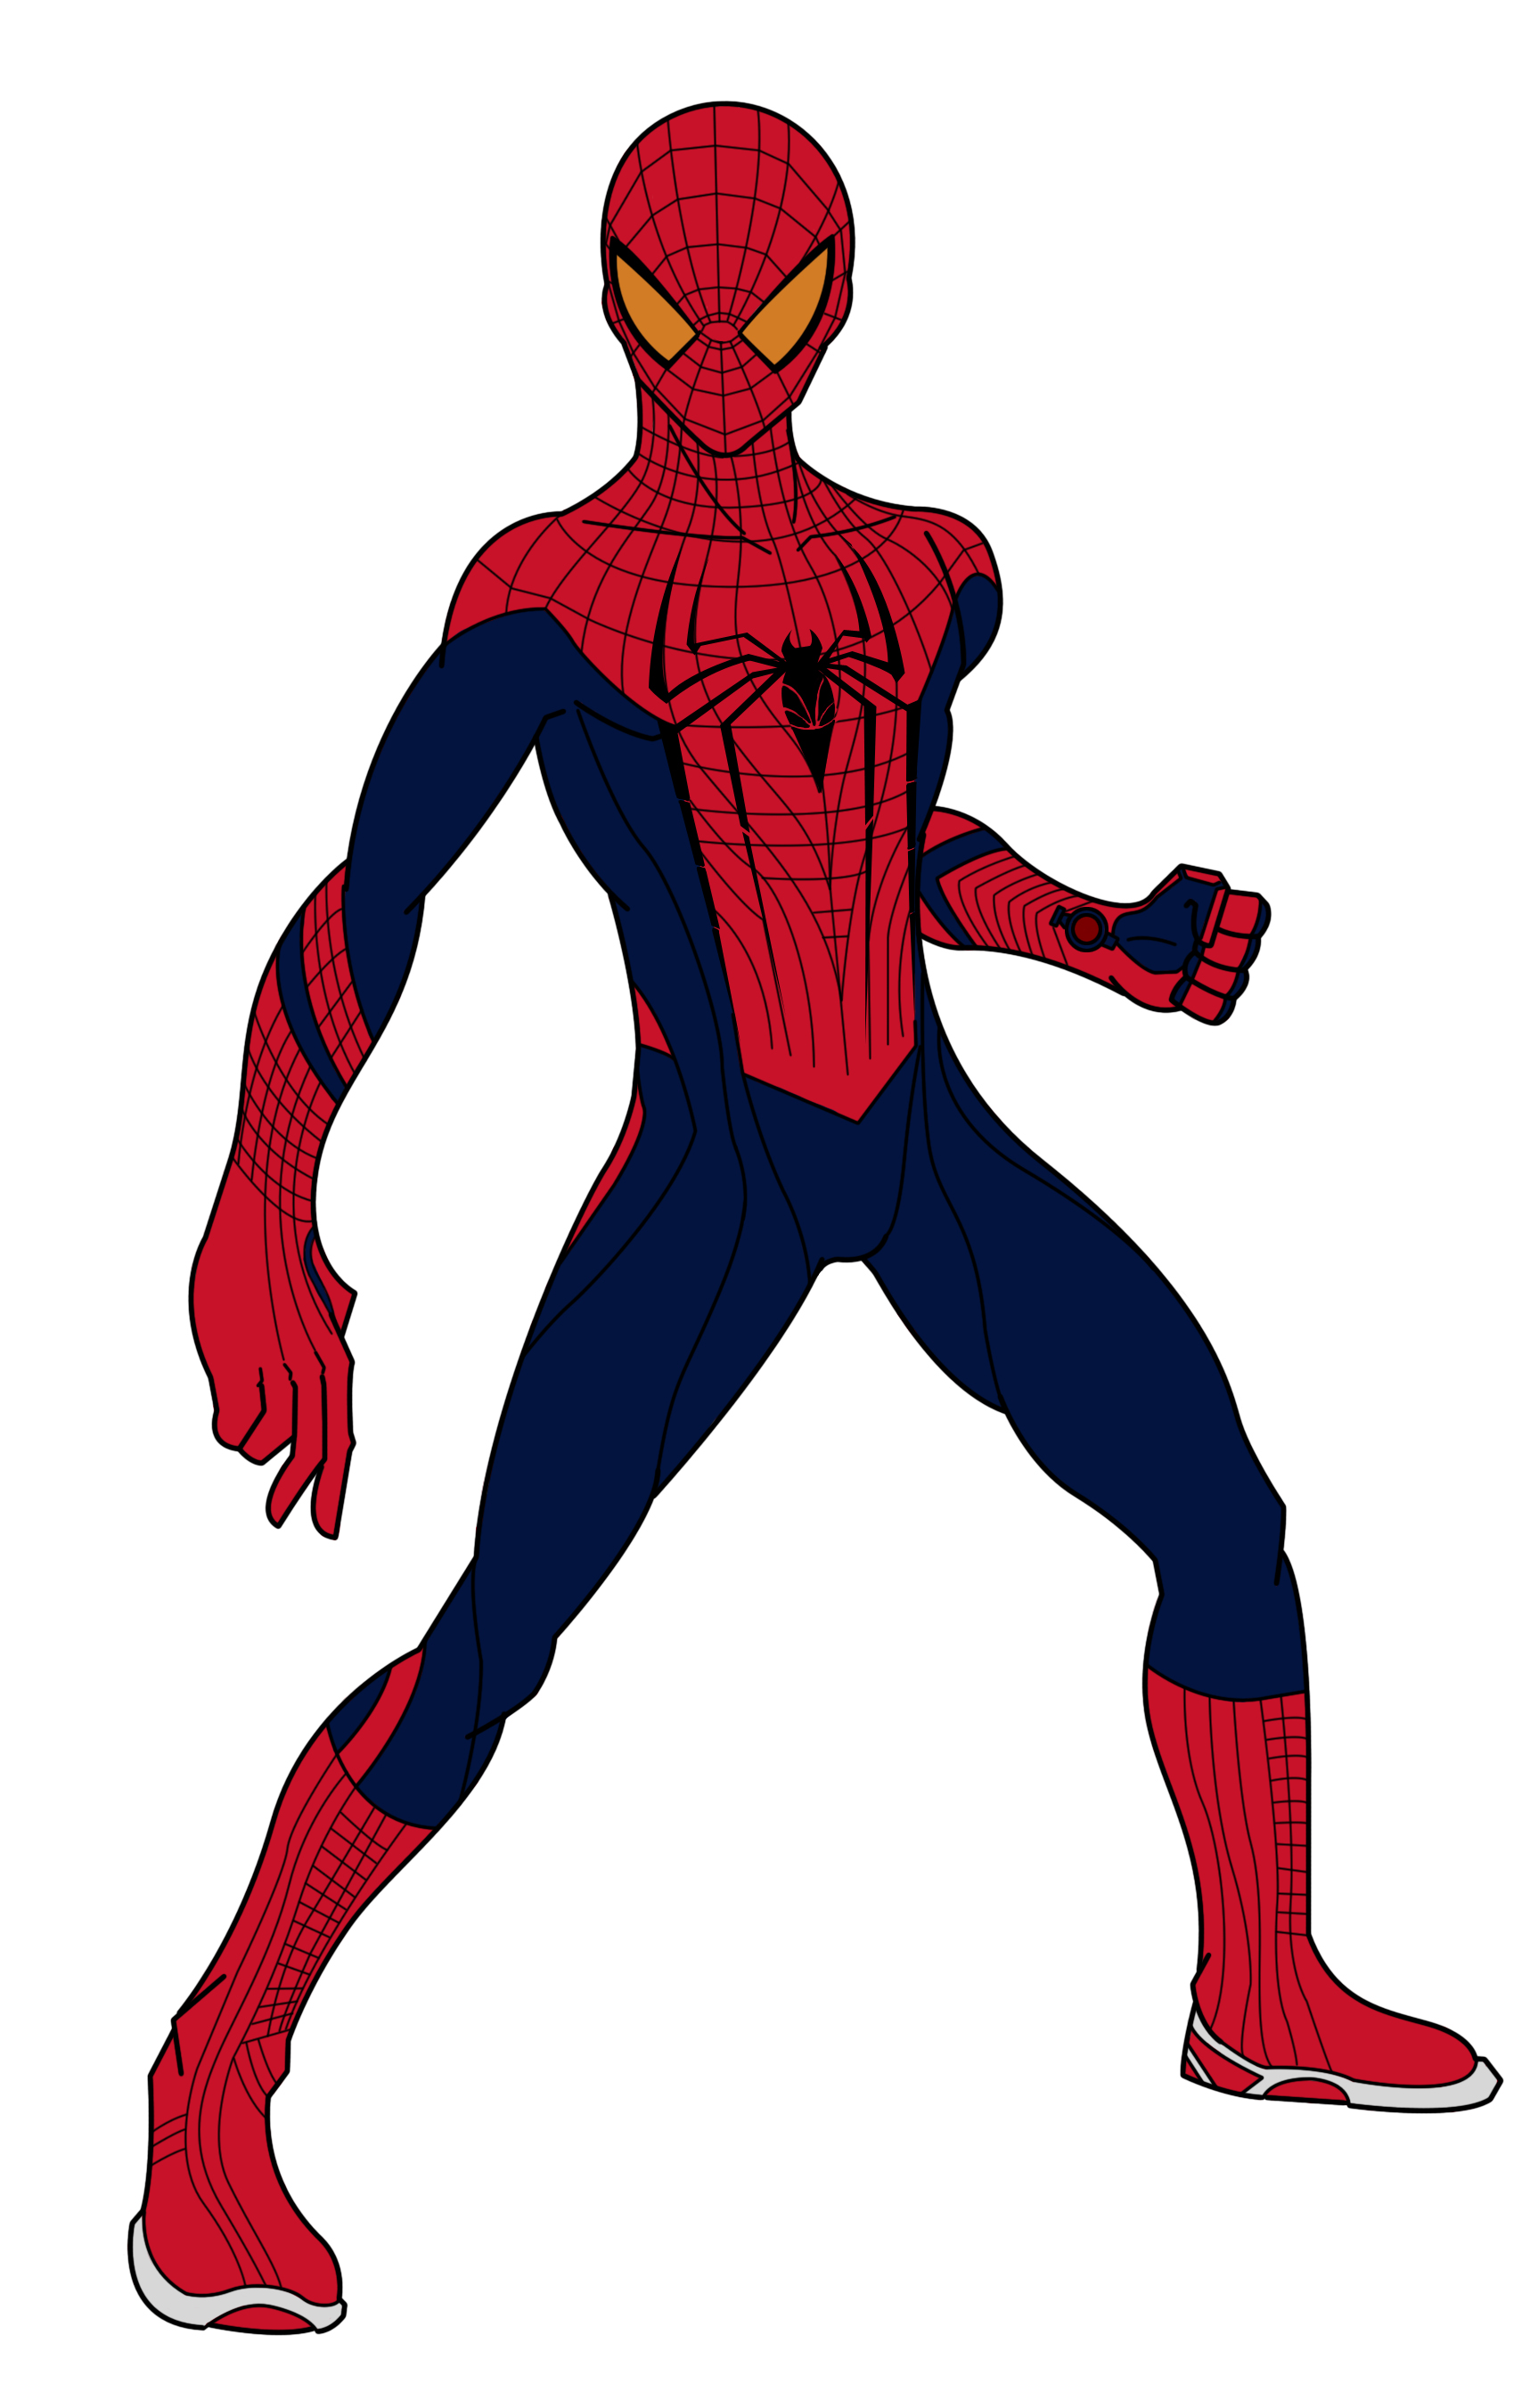 Tribute To Movie : The Amazing Spider-Man by TakarinaTLD93 on DeviantArt